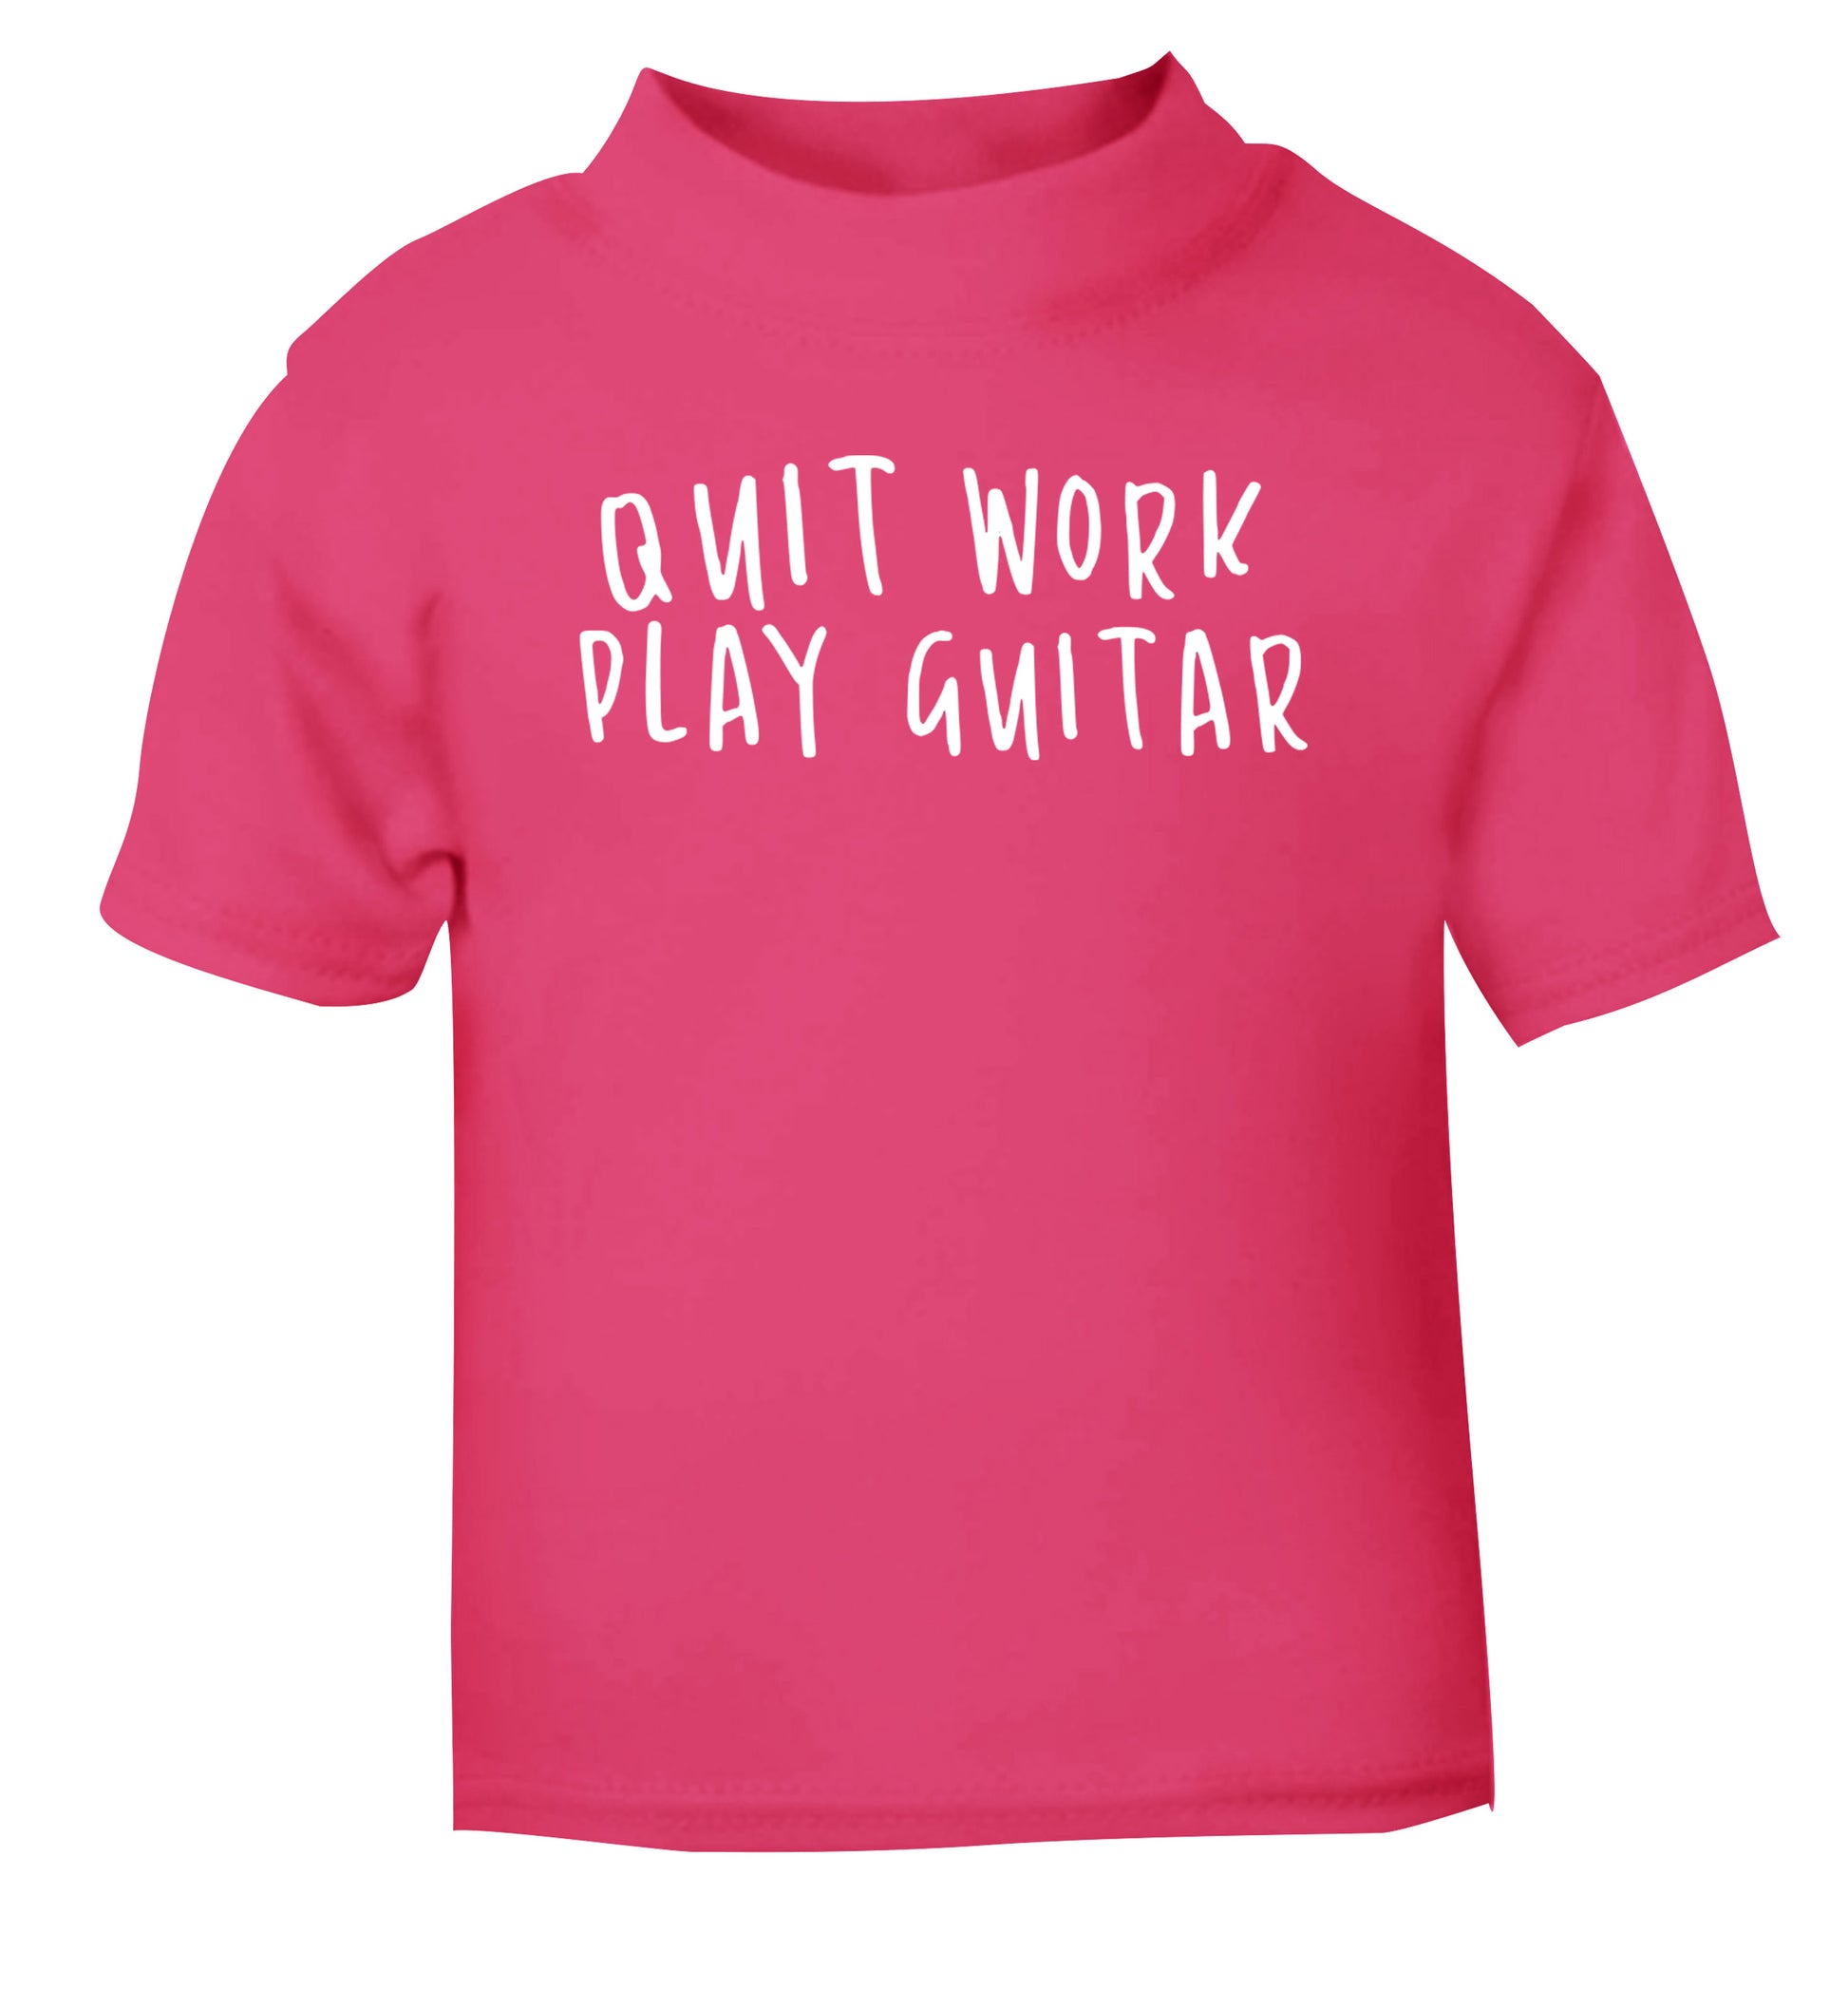 Quit work play guitar pink Baby Toddler Tshirt 2 Years